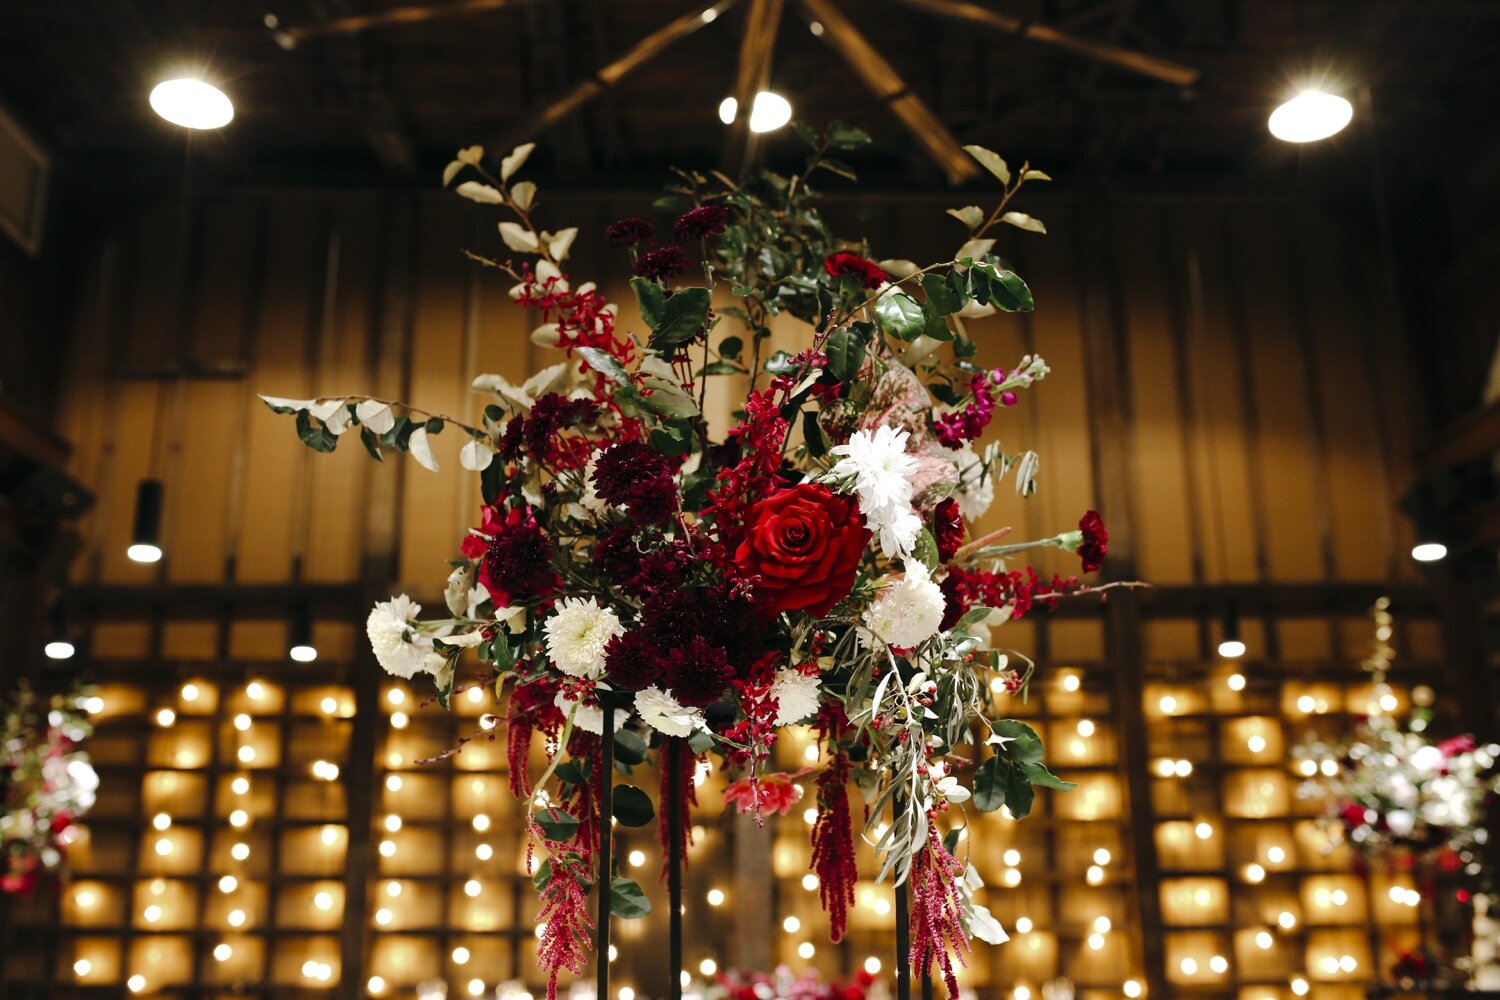 flowers tall on table centrepiece ovolo woolloomolloo hanging festoon lights